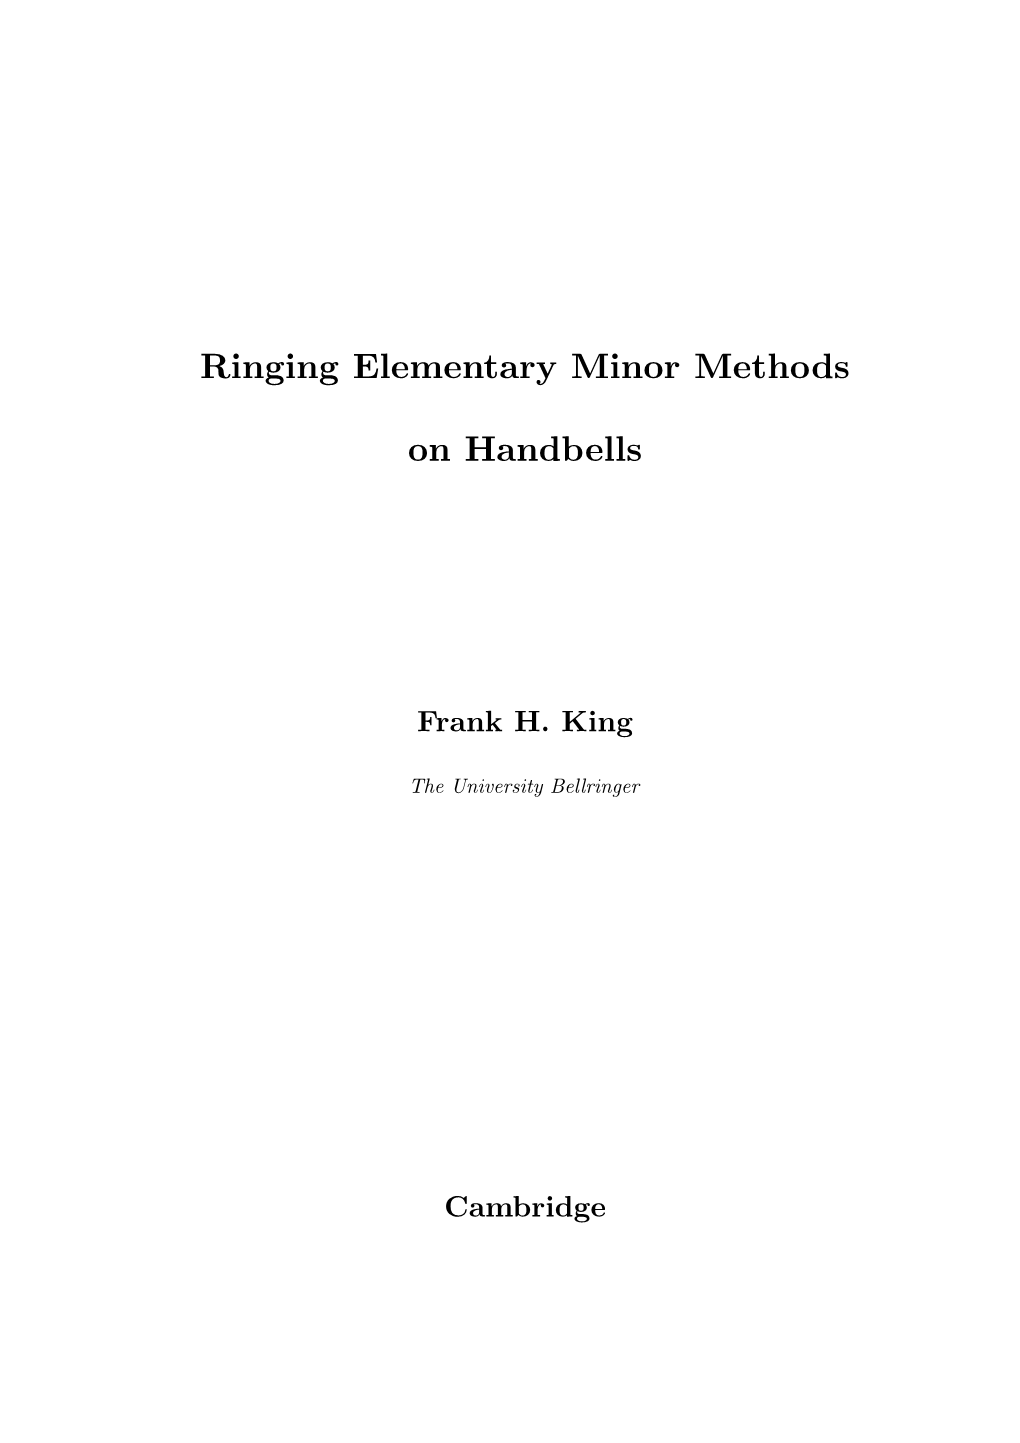 Ringing Elementary Minor Methods on Handbells